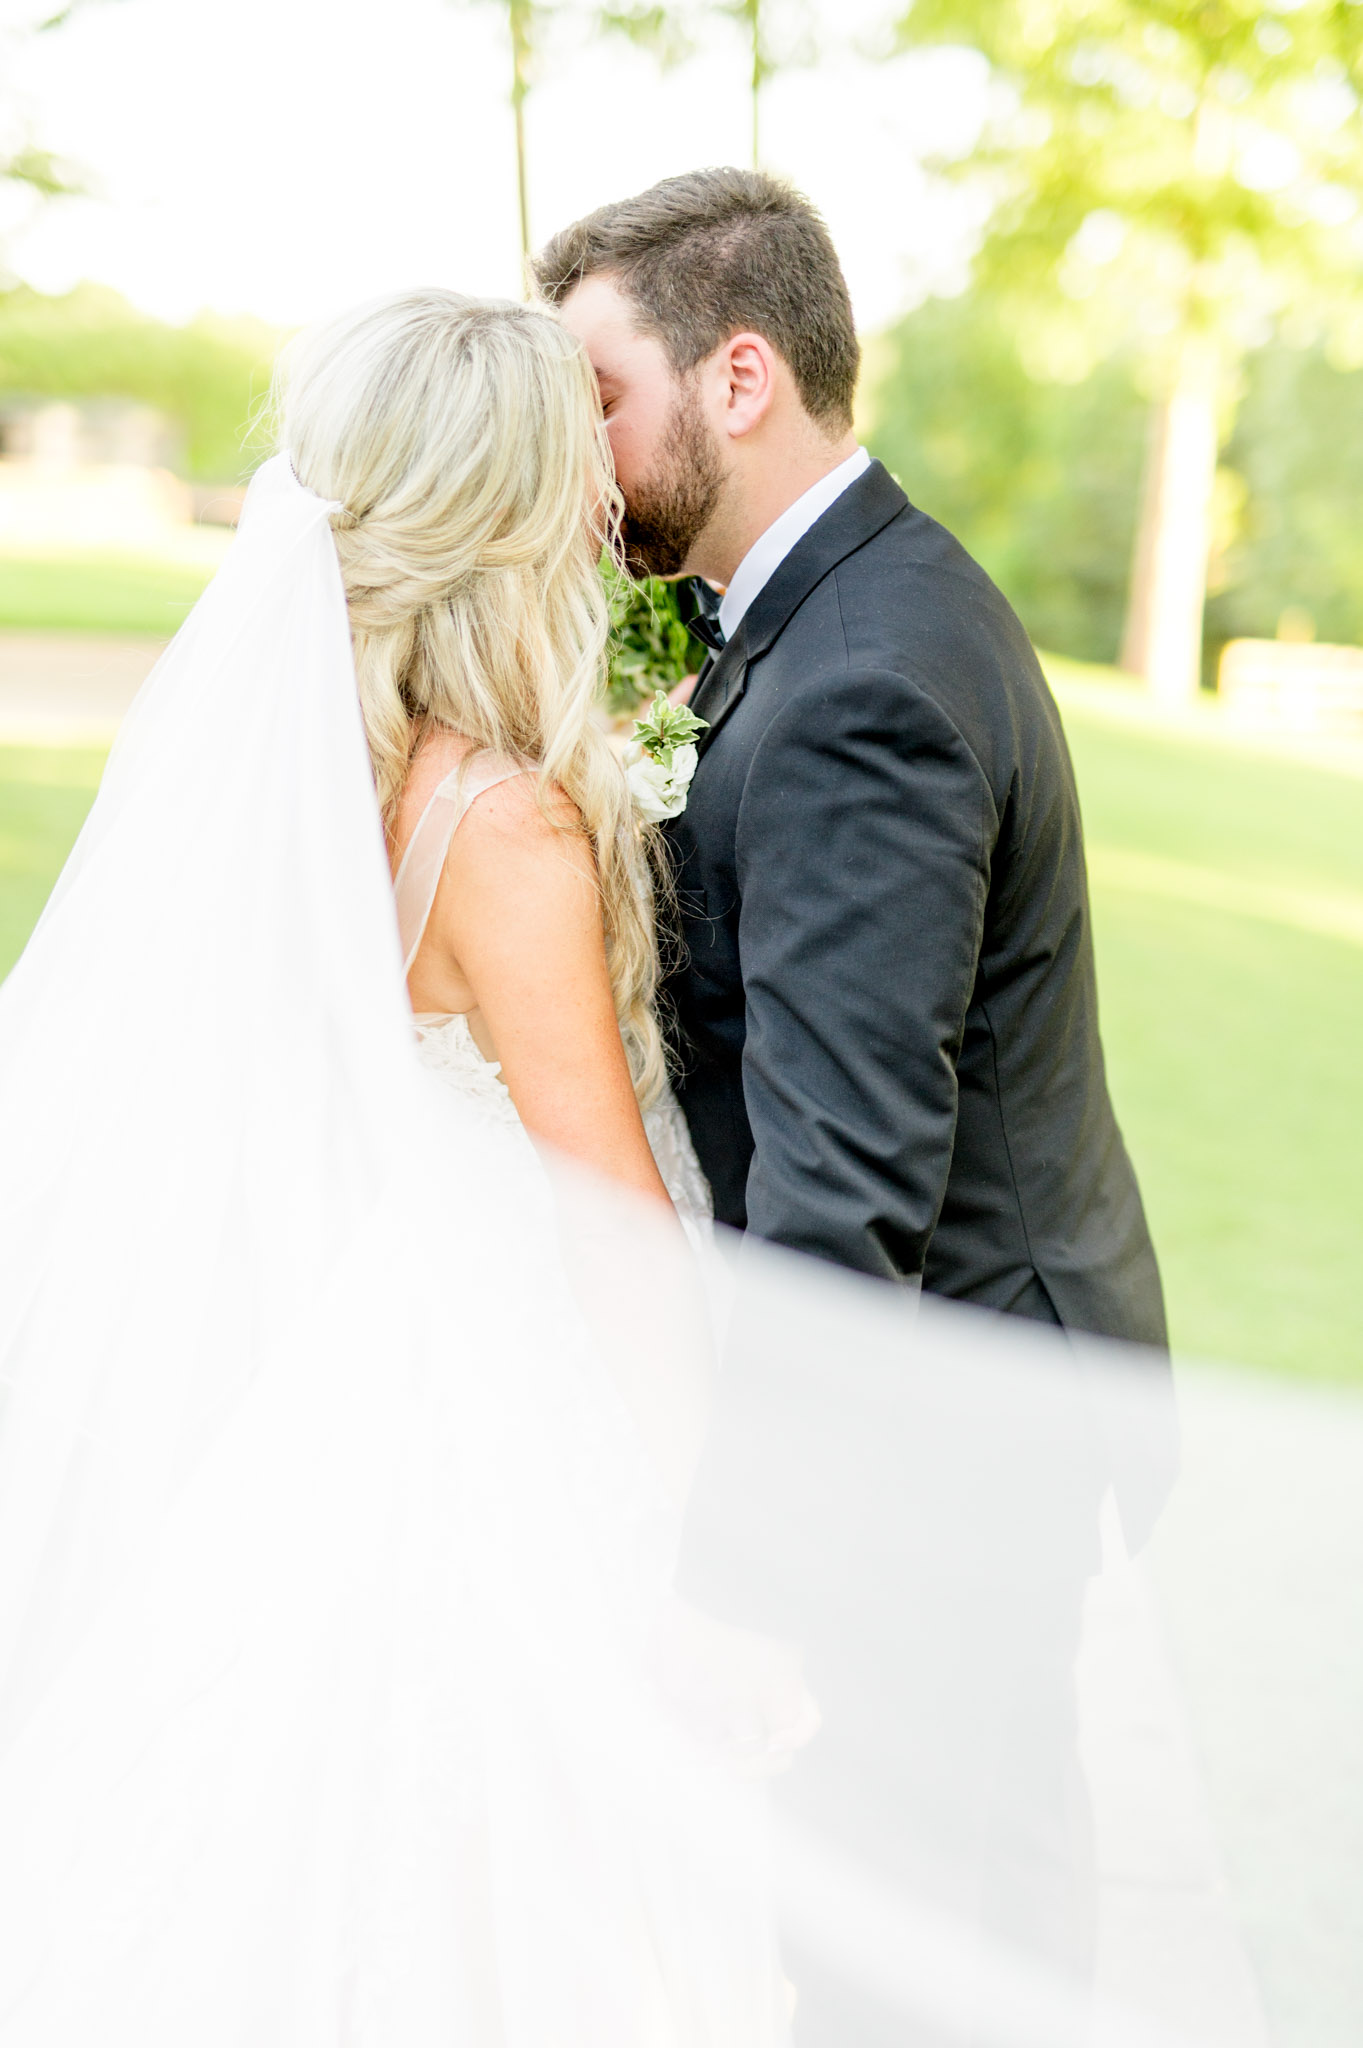 Bride and groom kiss as veil blows.